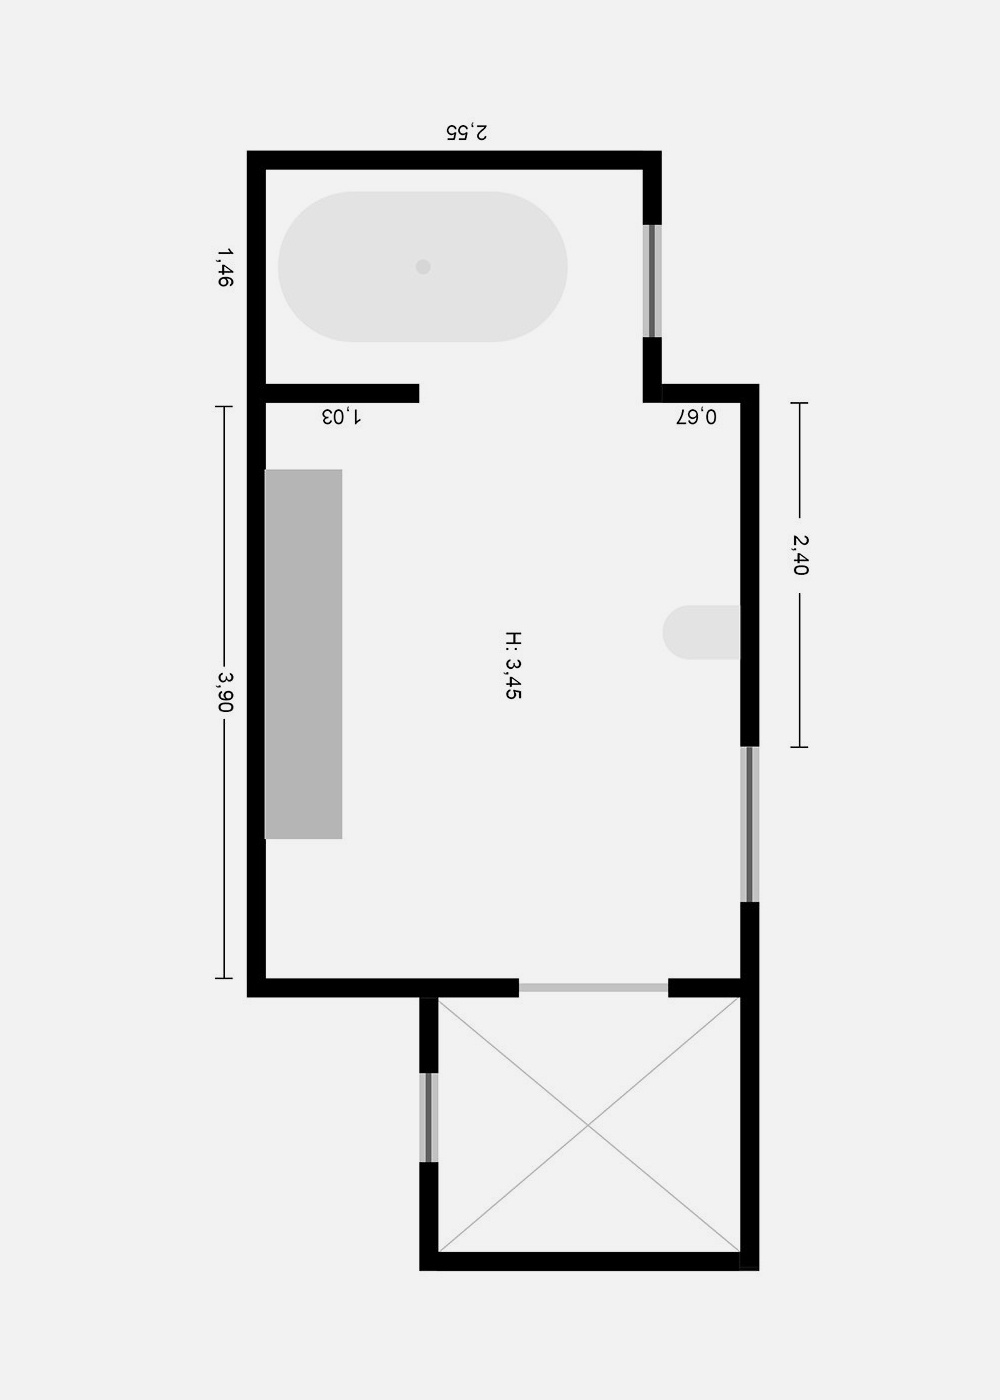 Location_24_Floorplan3